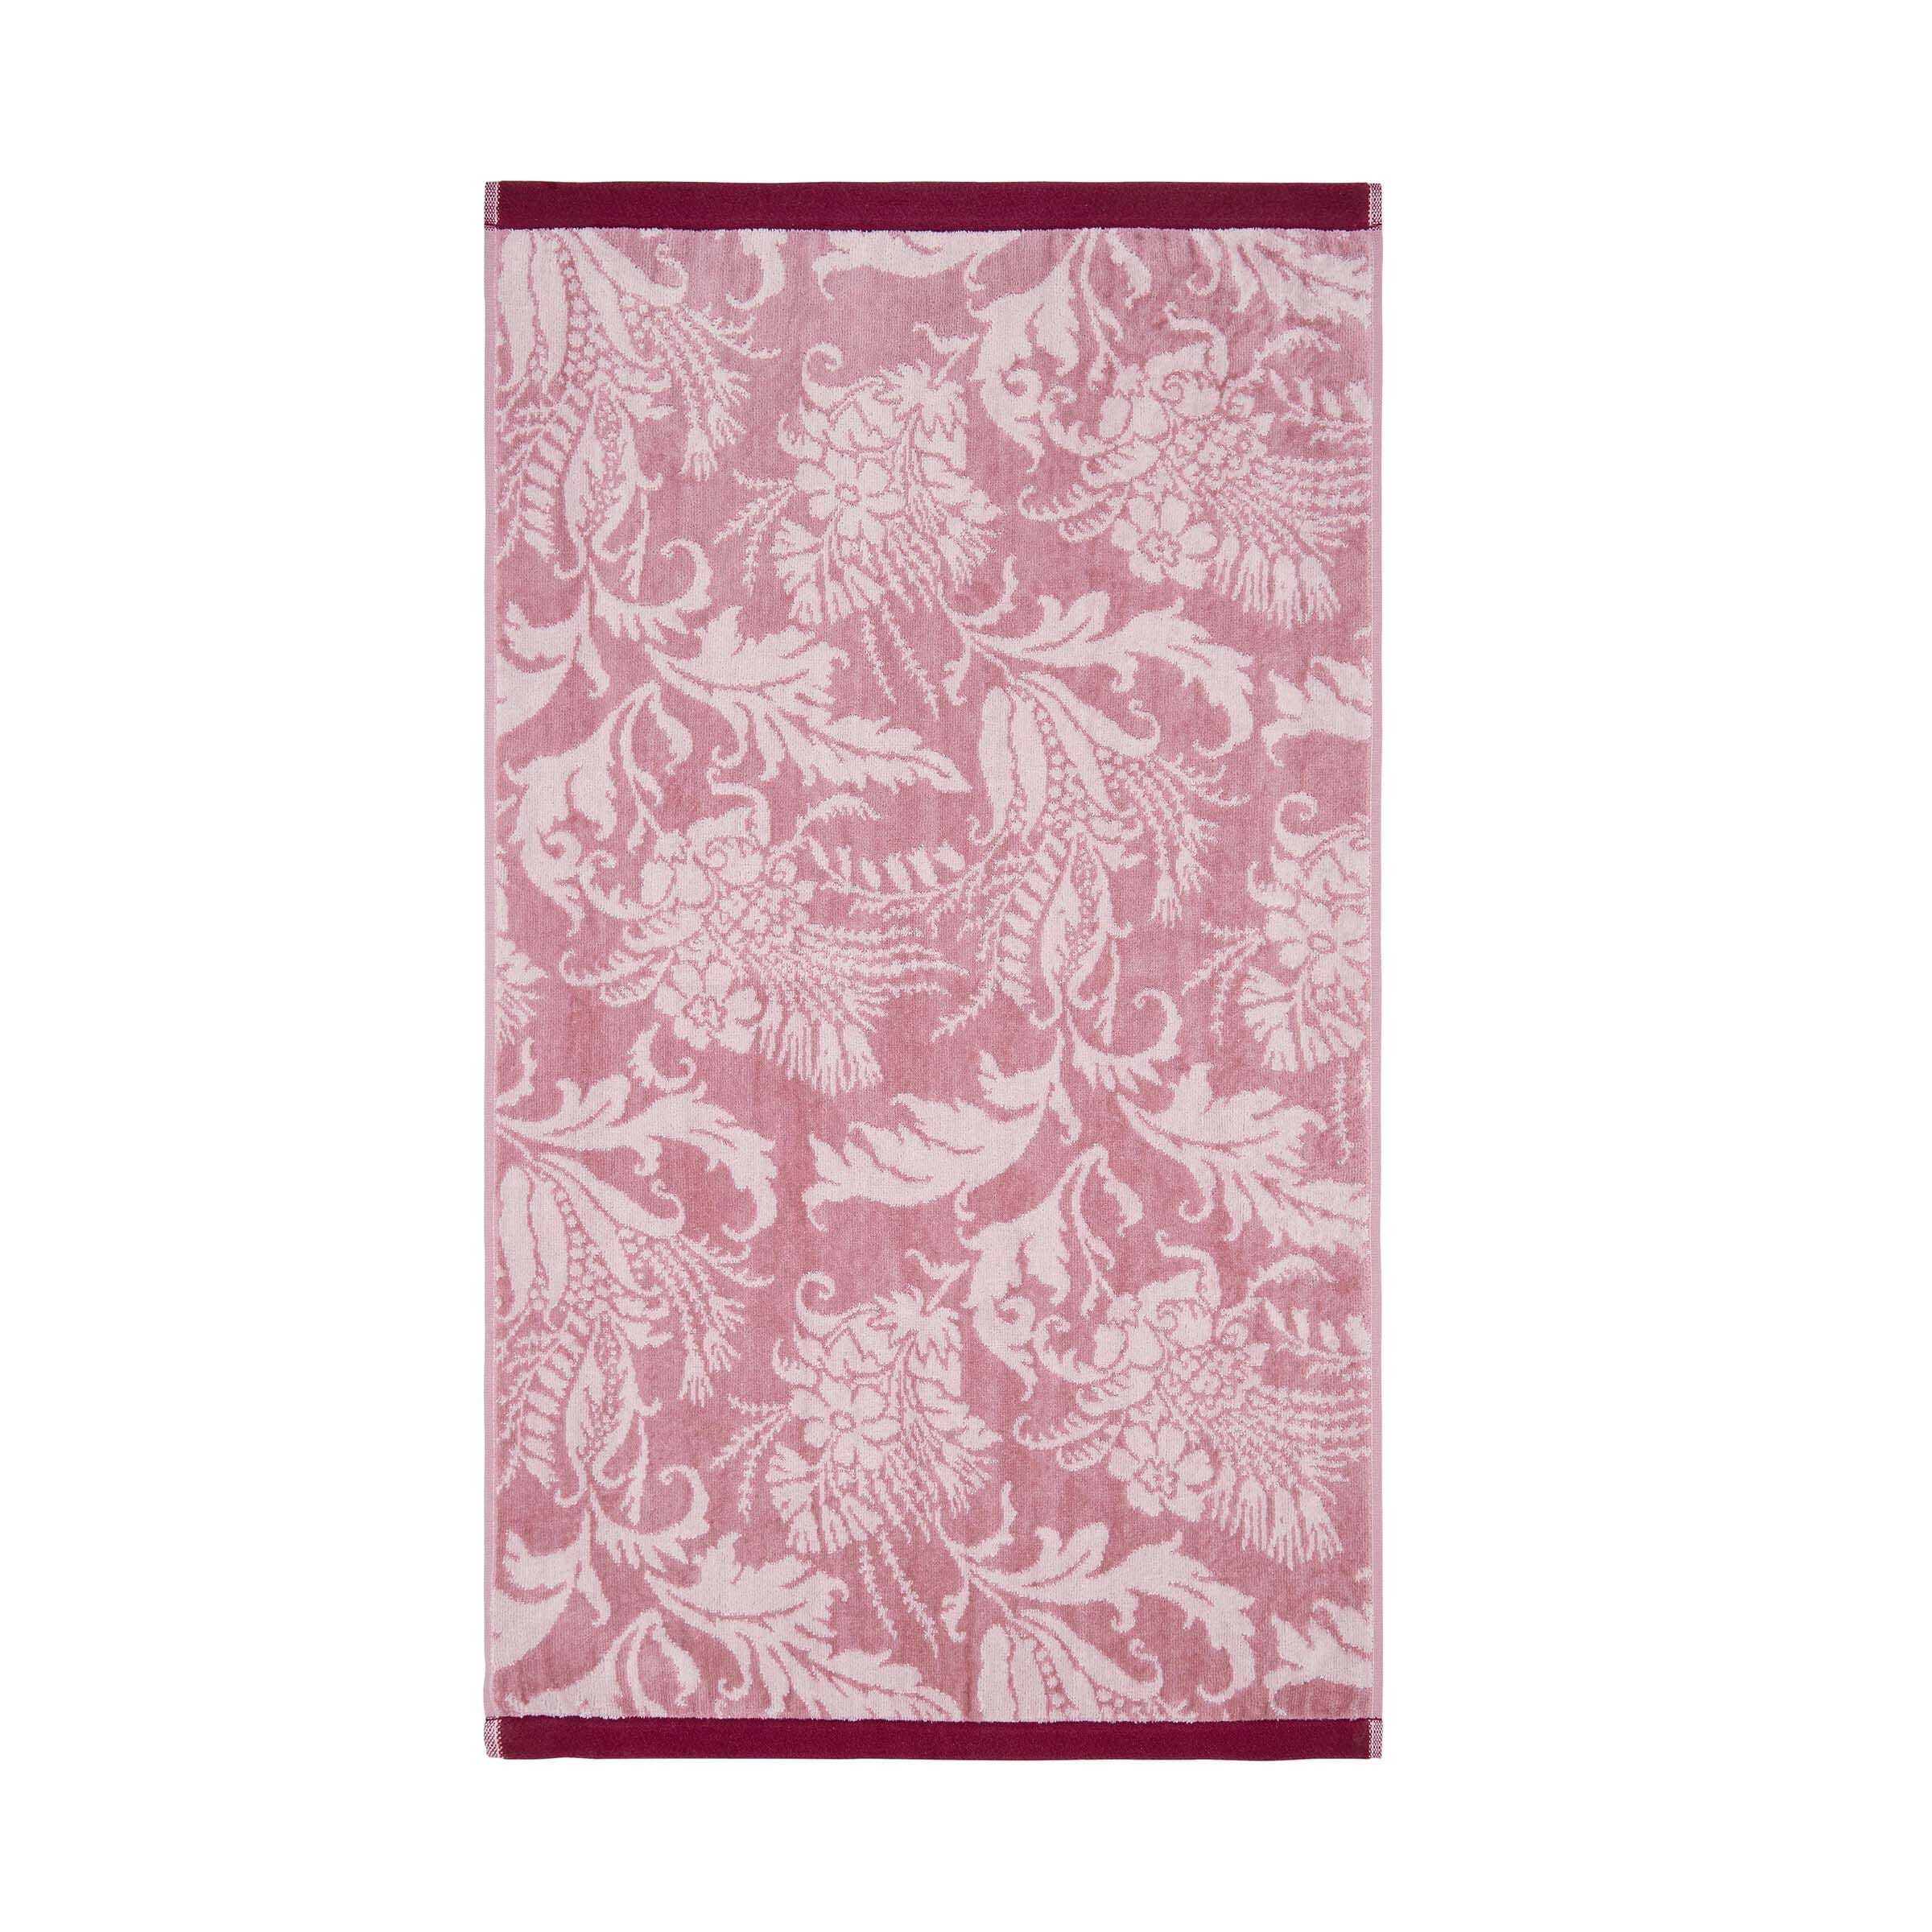 Ted Baker Baroque Hand Towel, Dusky Pink - image 1